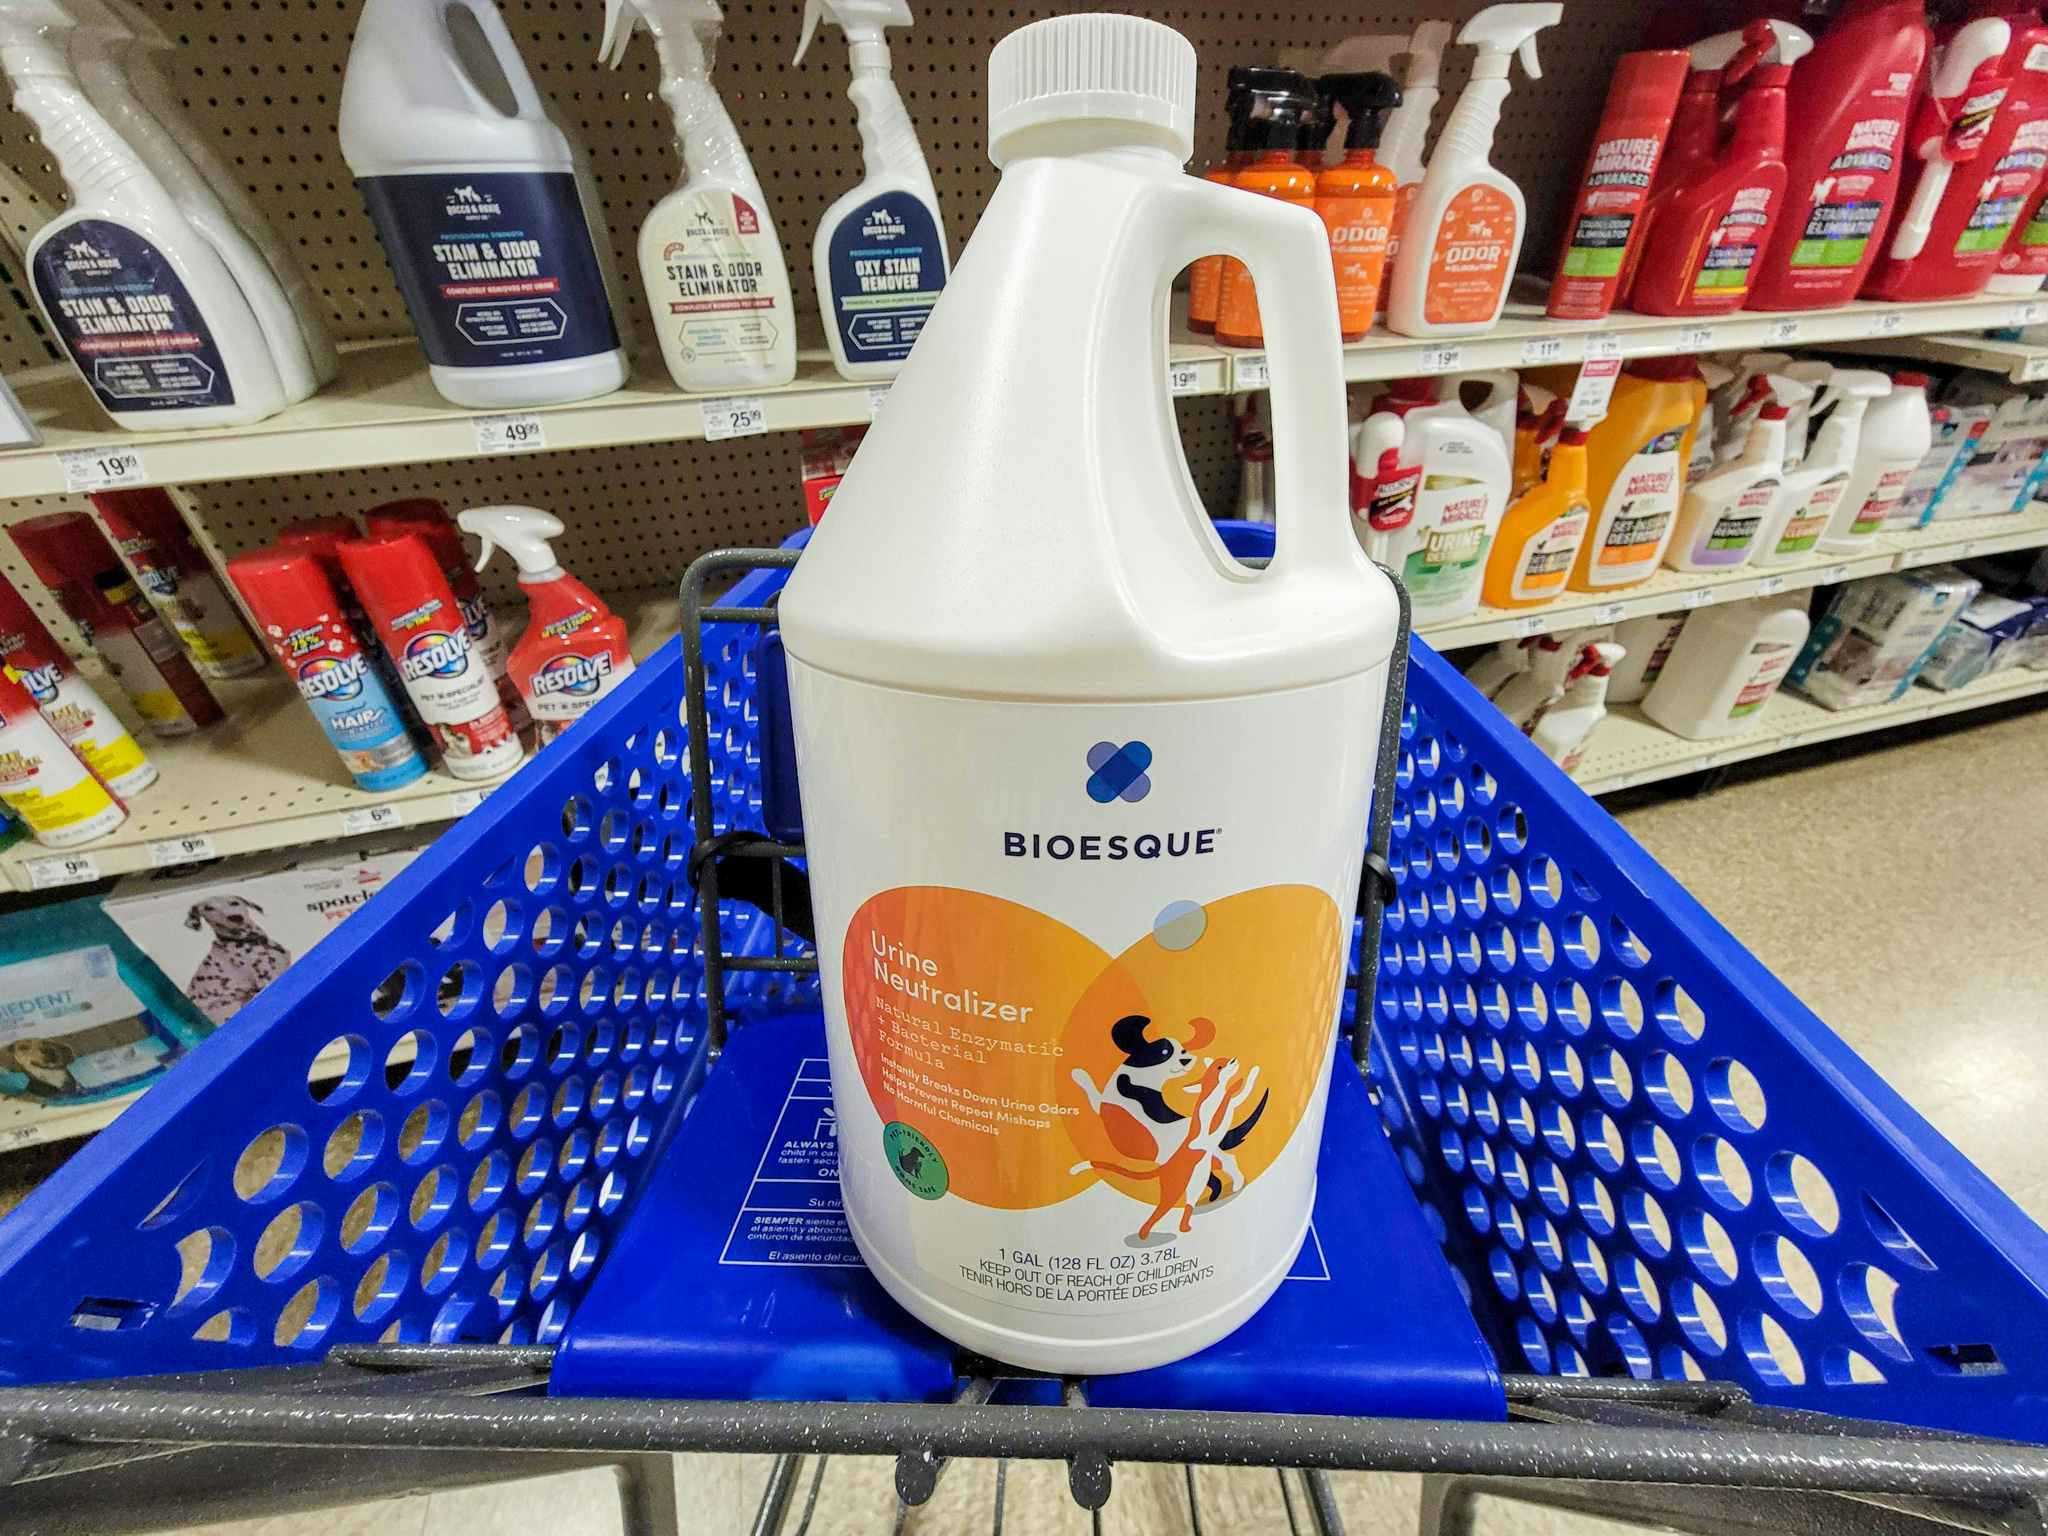 a gallon jug of bioesque urine neutralizer in a cart